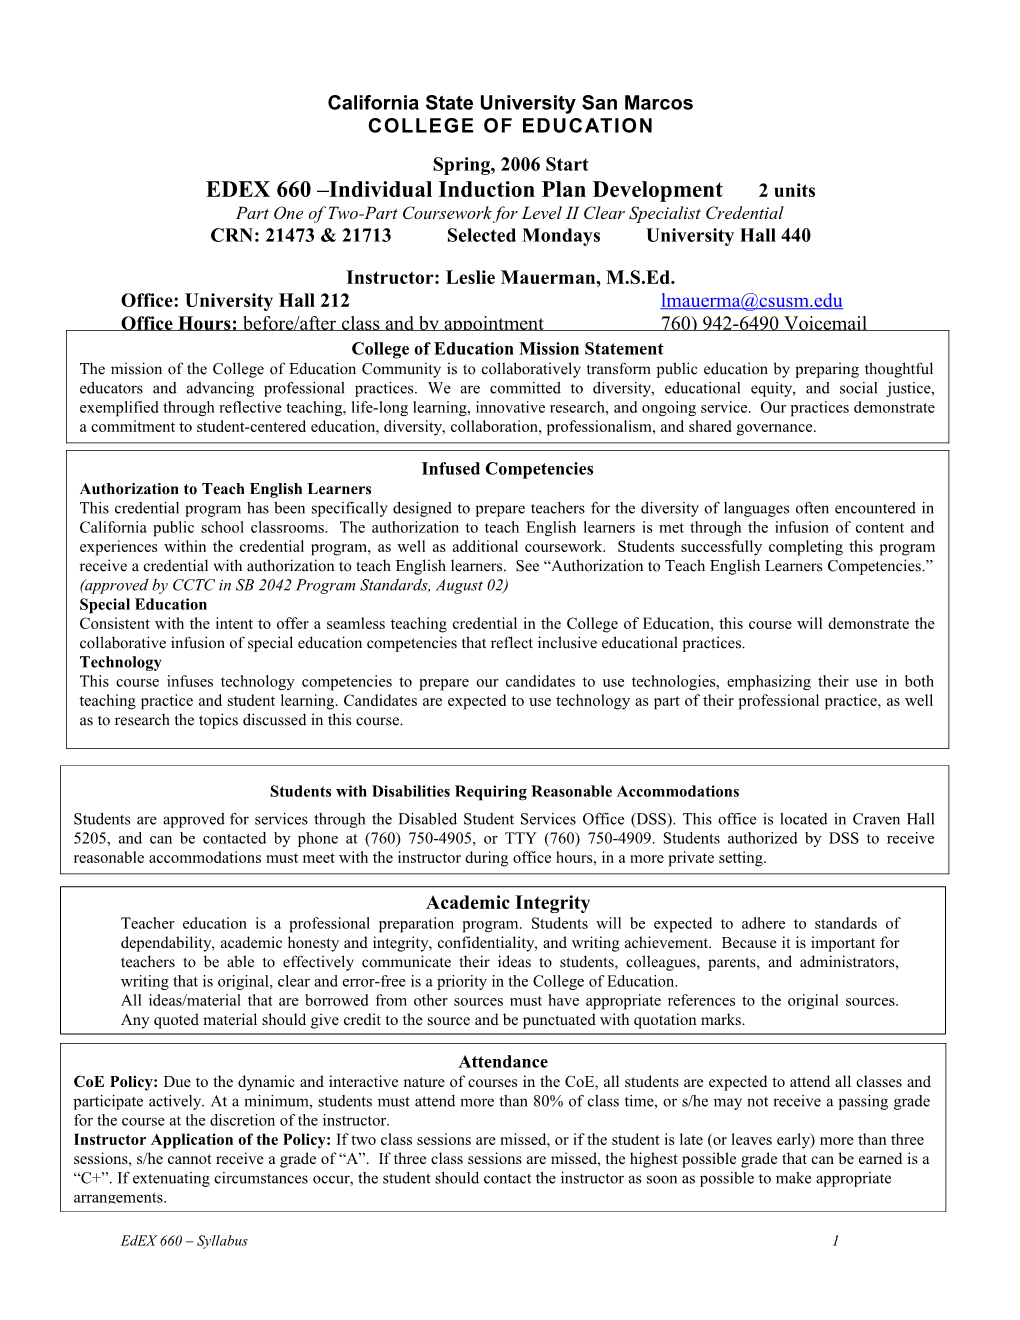 EDEX 660 Individual Induction Plan Development 2 Units